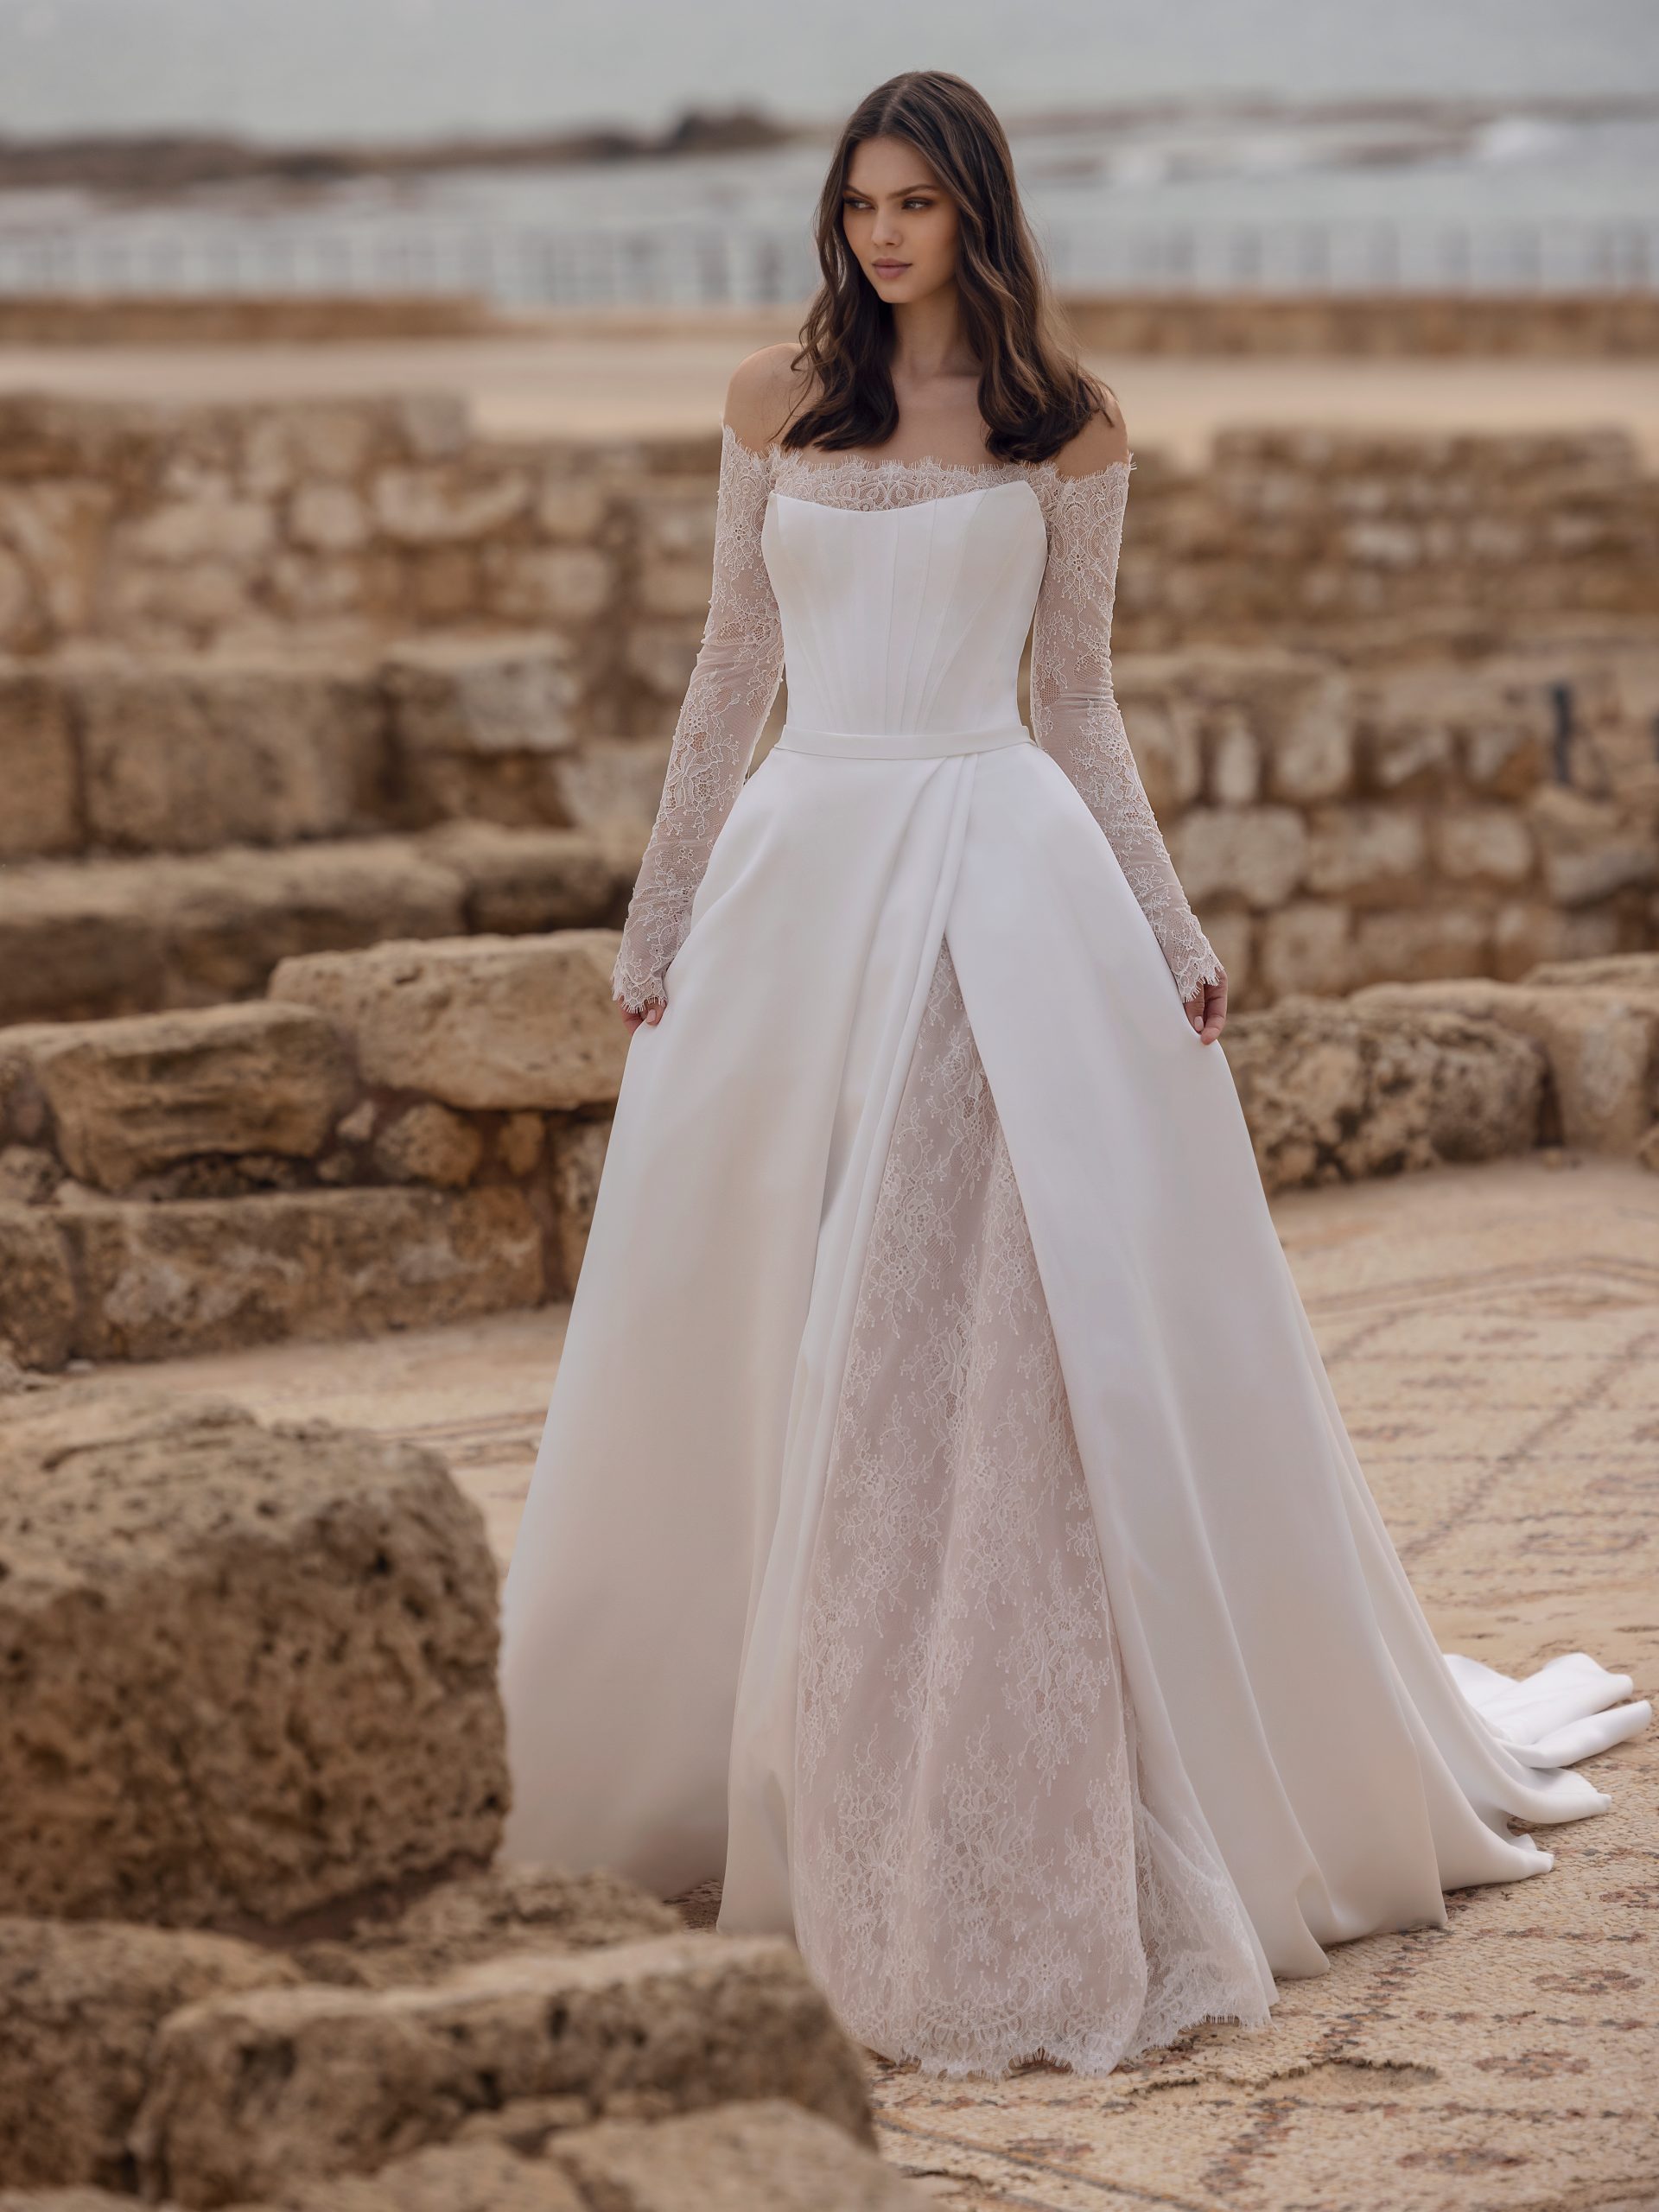 Pnina Tornai Wedding Dress Rushed Heart Neck Size 6 Gown 2-4